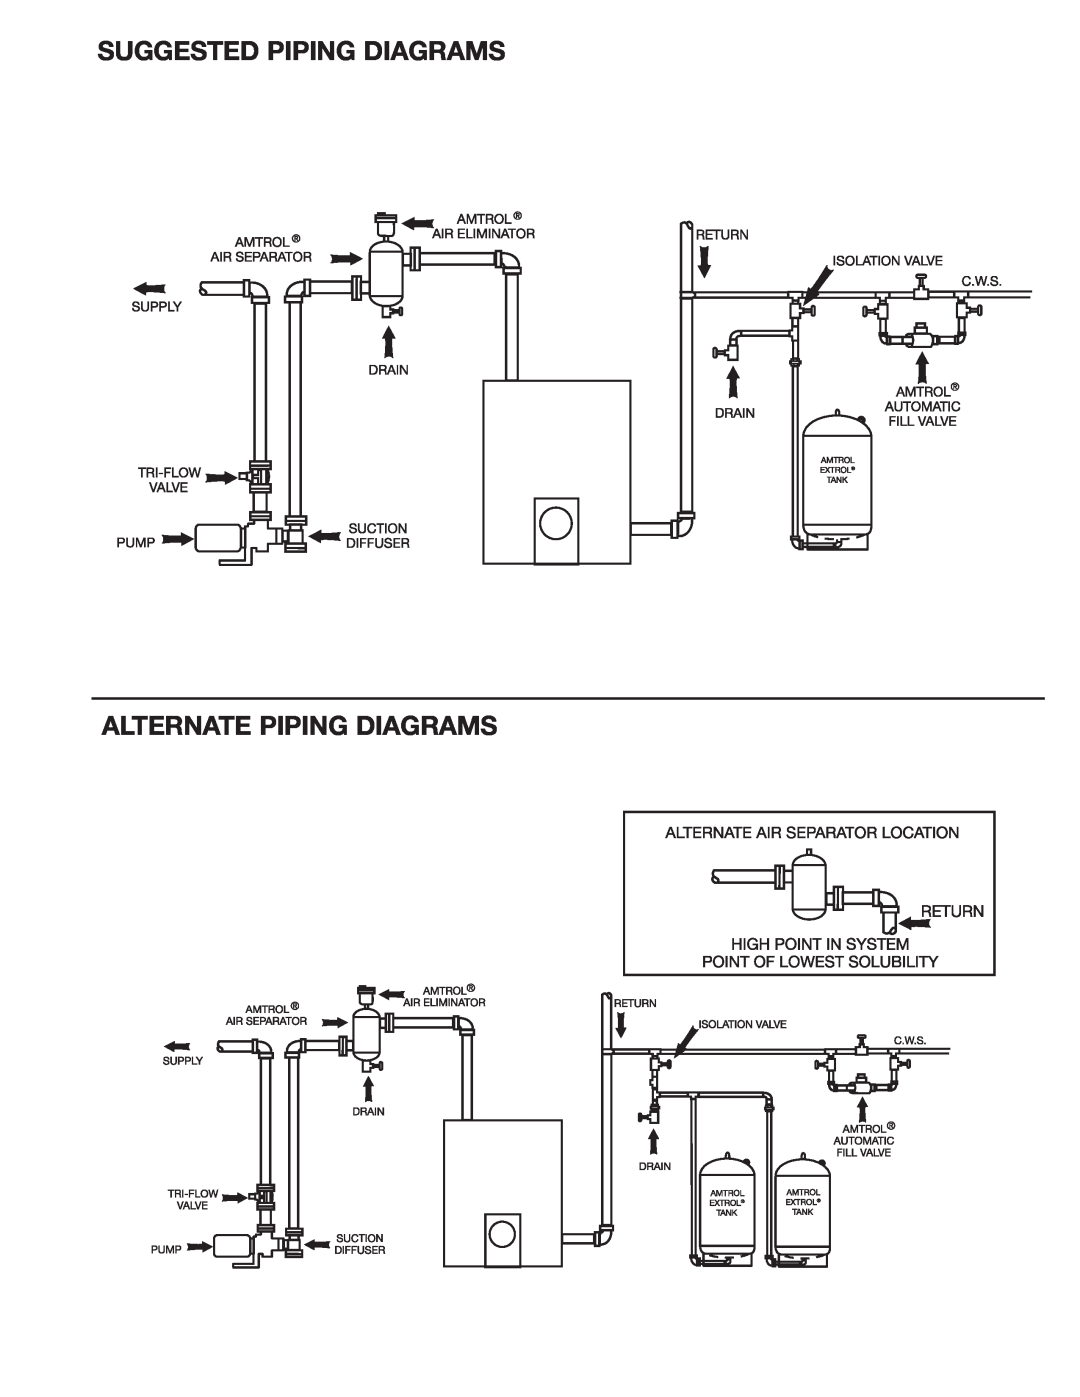 Amtrol 100 LBC, 85 LBC, 50 LBC, 35 LBC warranty Suggested Piping Diagrams Alternate Piping Diagrams 